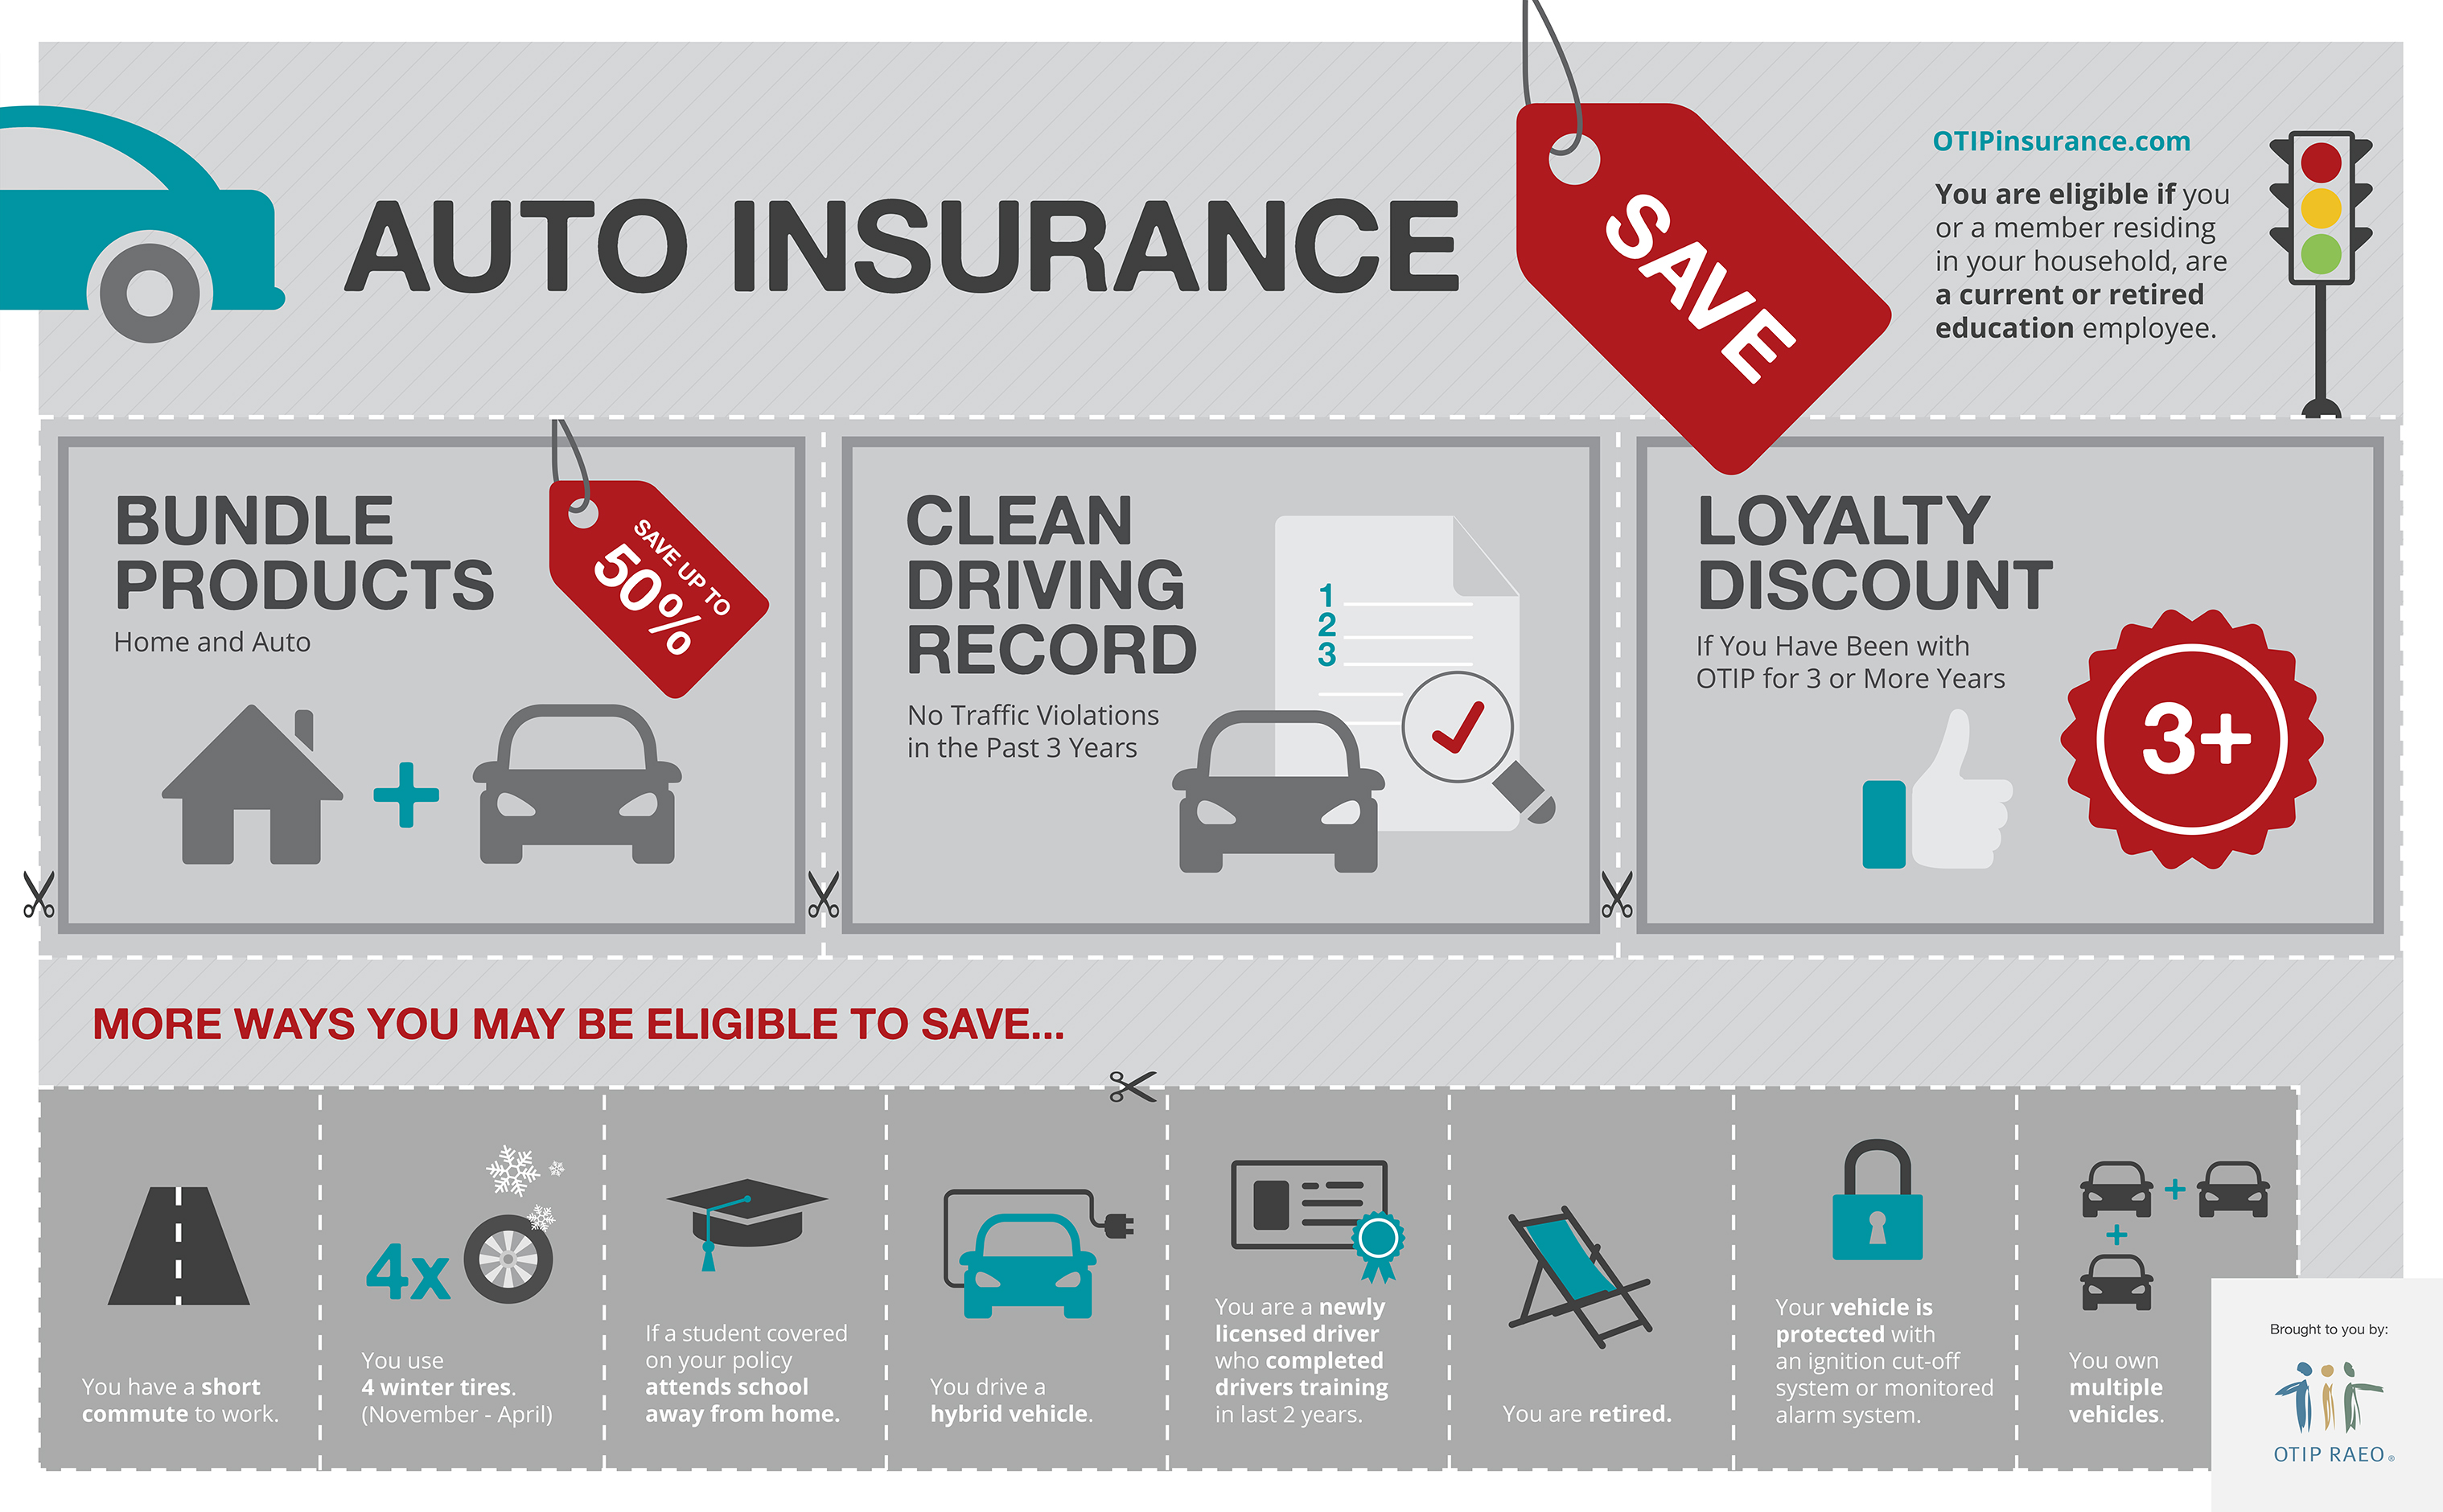 Car Insurance Discounts OTIP Insurance